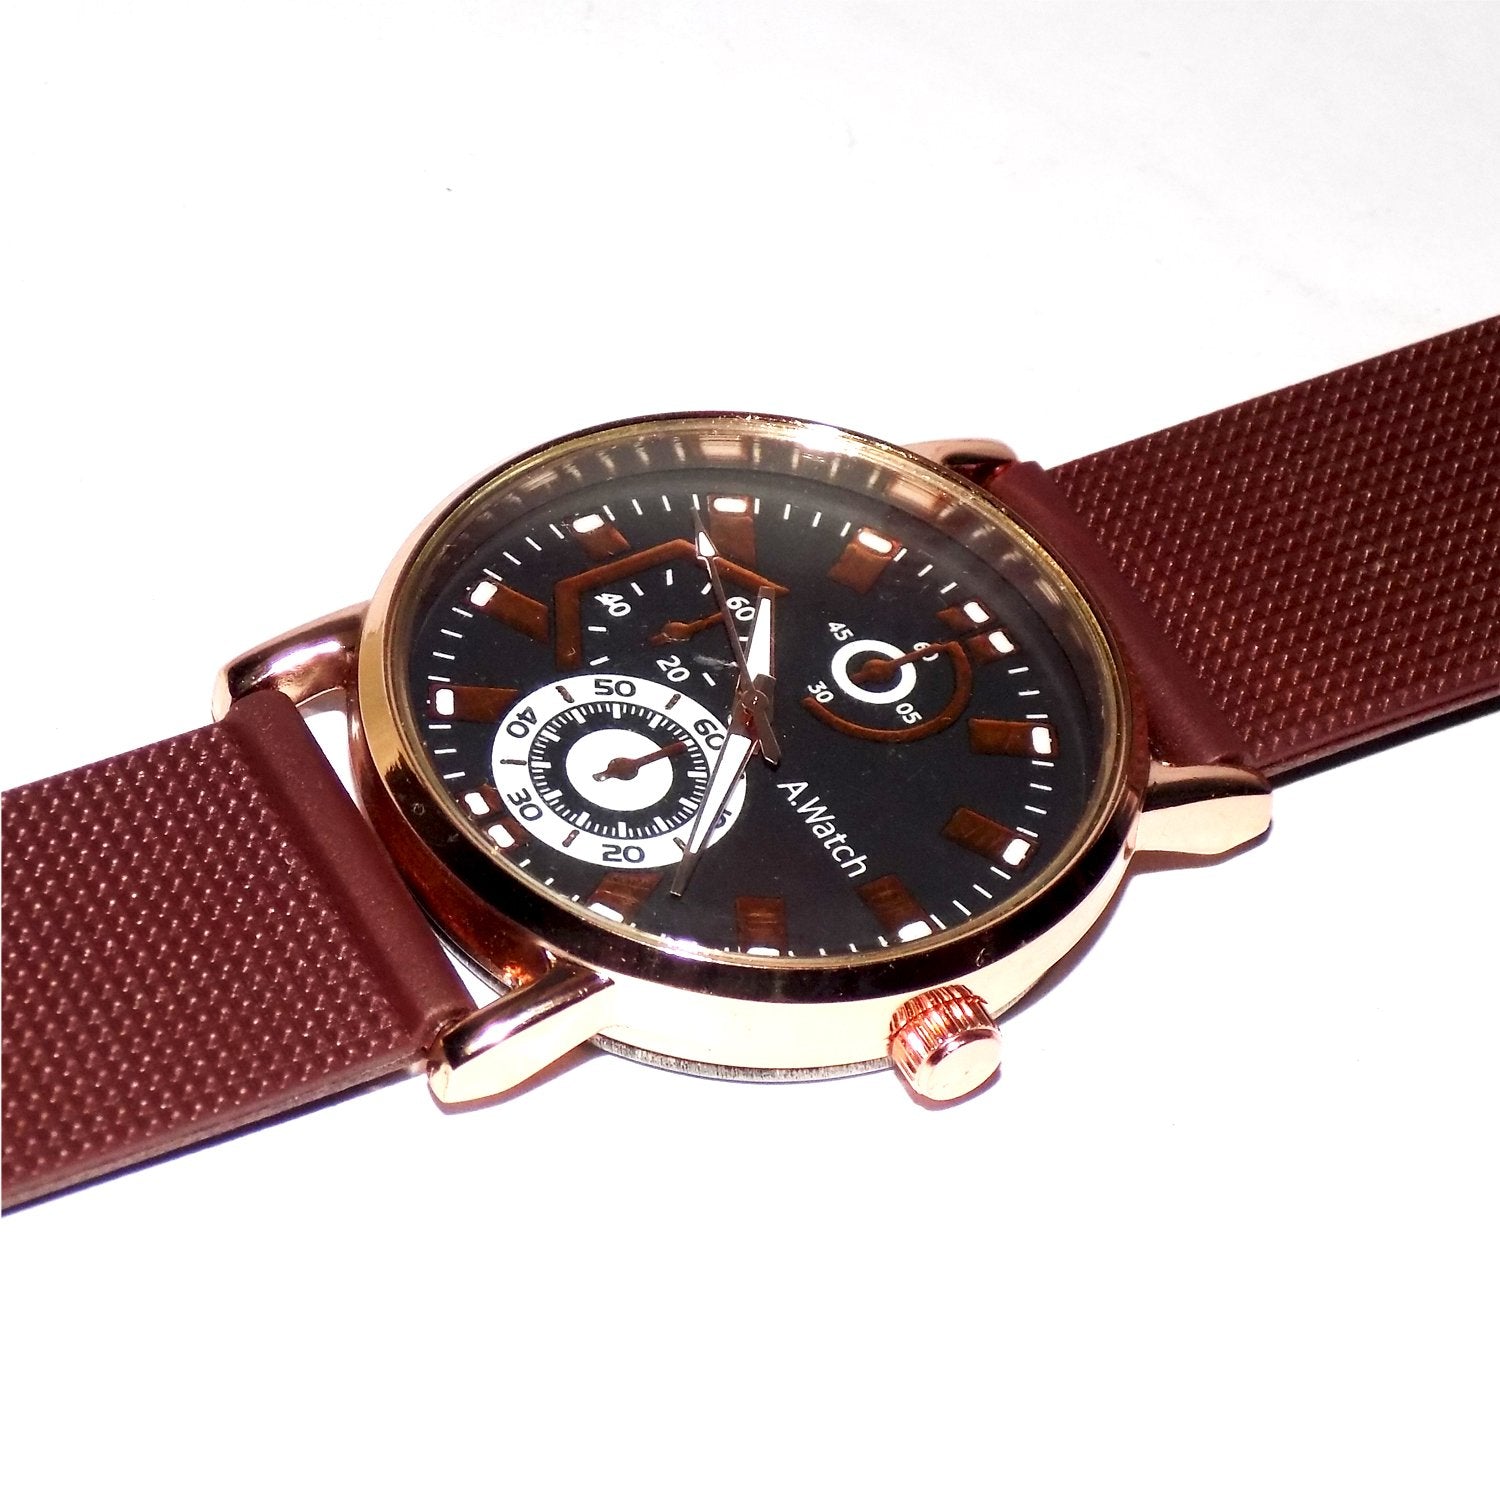 1818 Unique & Premium Analogue Stylish Watch With Stylish Wrist Band - SkyShopy